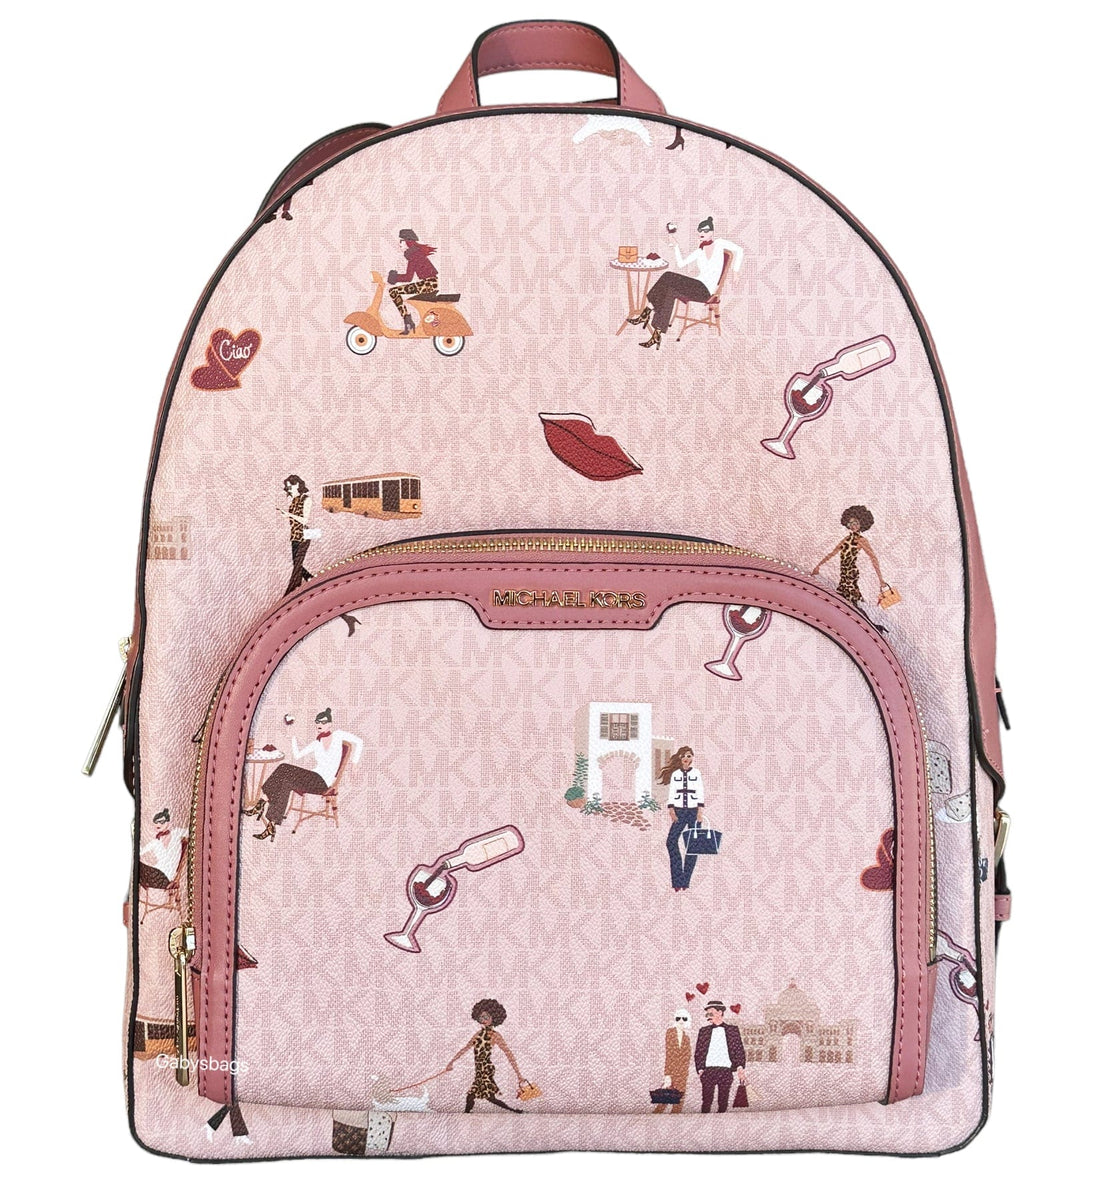 Michael Kors Backpack neon pink MK new  Michael kors backpack, Hot pink  white, Michael kors bag